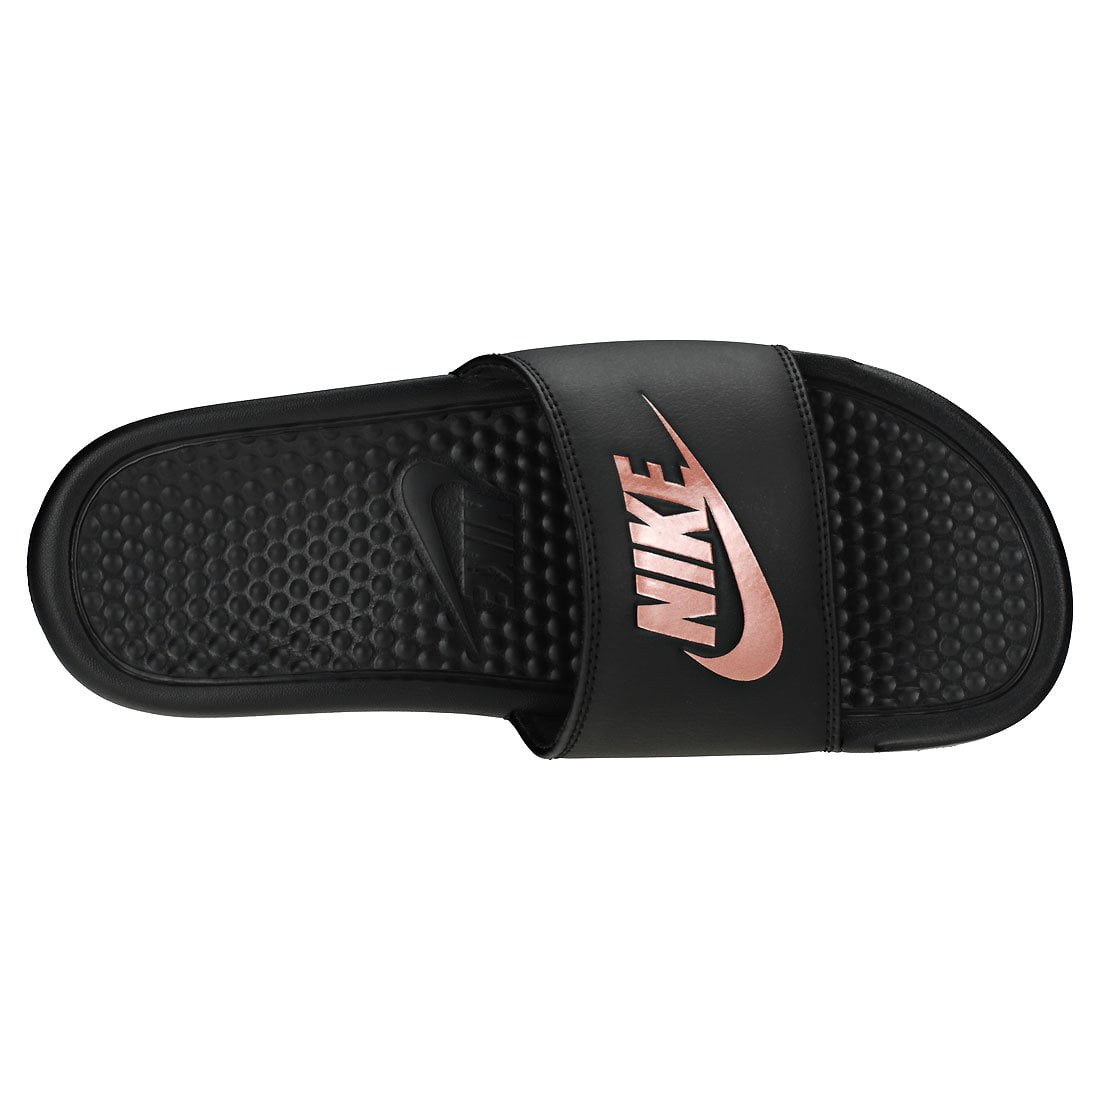 Women's Benassi Jdi / Rose Gold - Ankle-High Sport Slide Sandals - Walmart.com